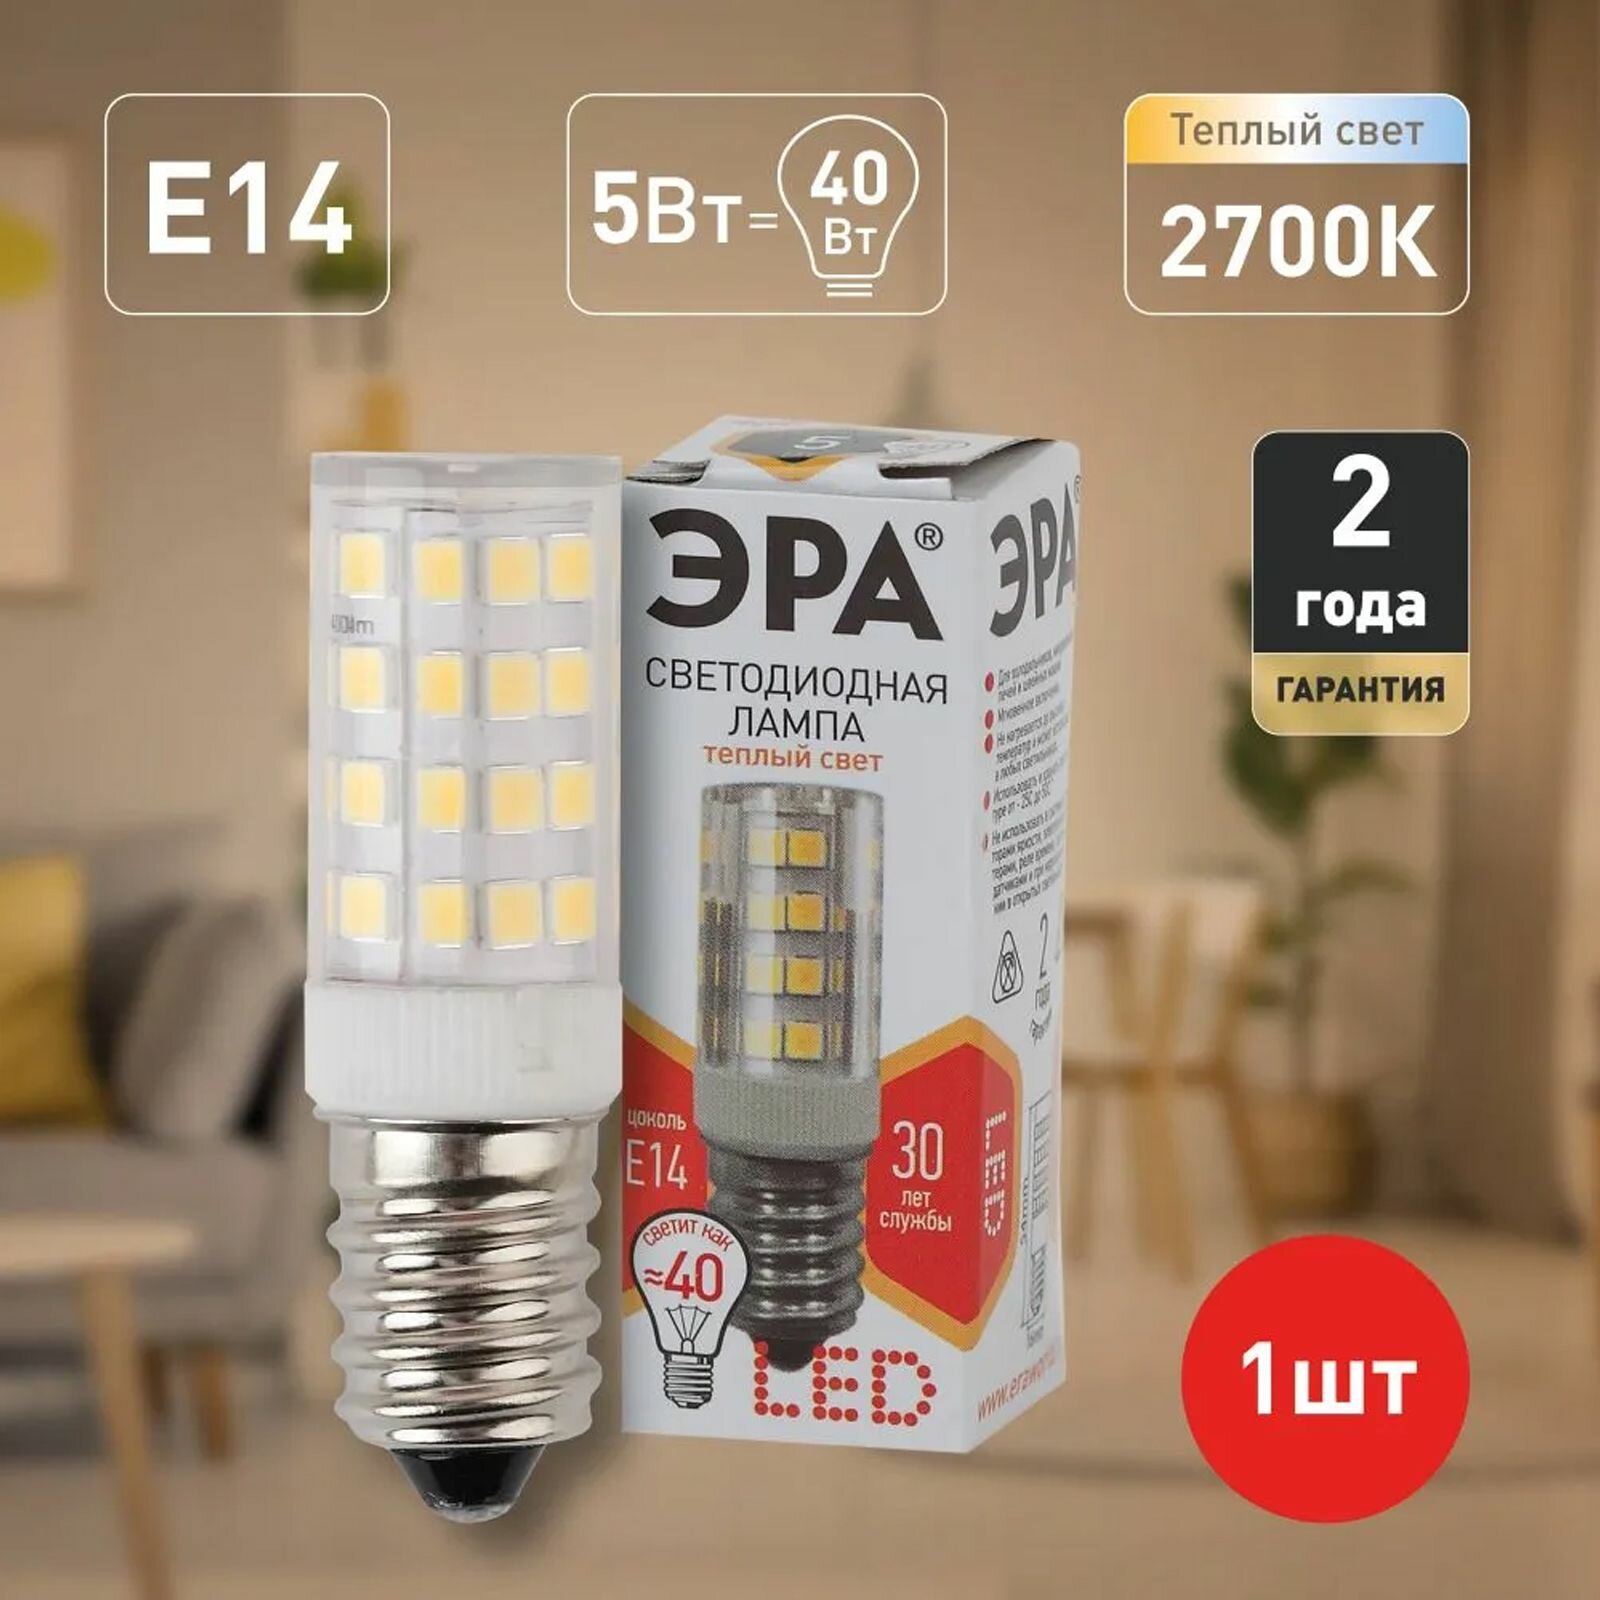 Лампочка светодиодная ЭРА STD LED T25-5W-CORN-827-E14 / Е14 5Вт теплый белый свет